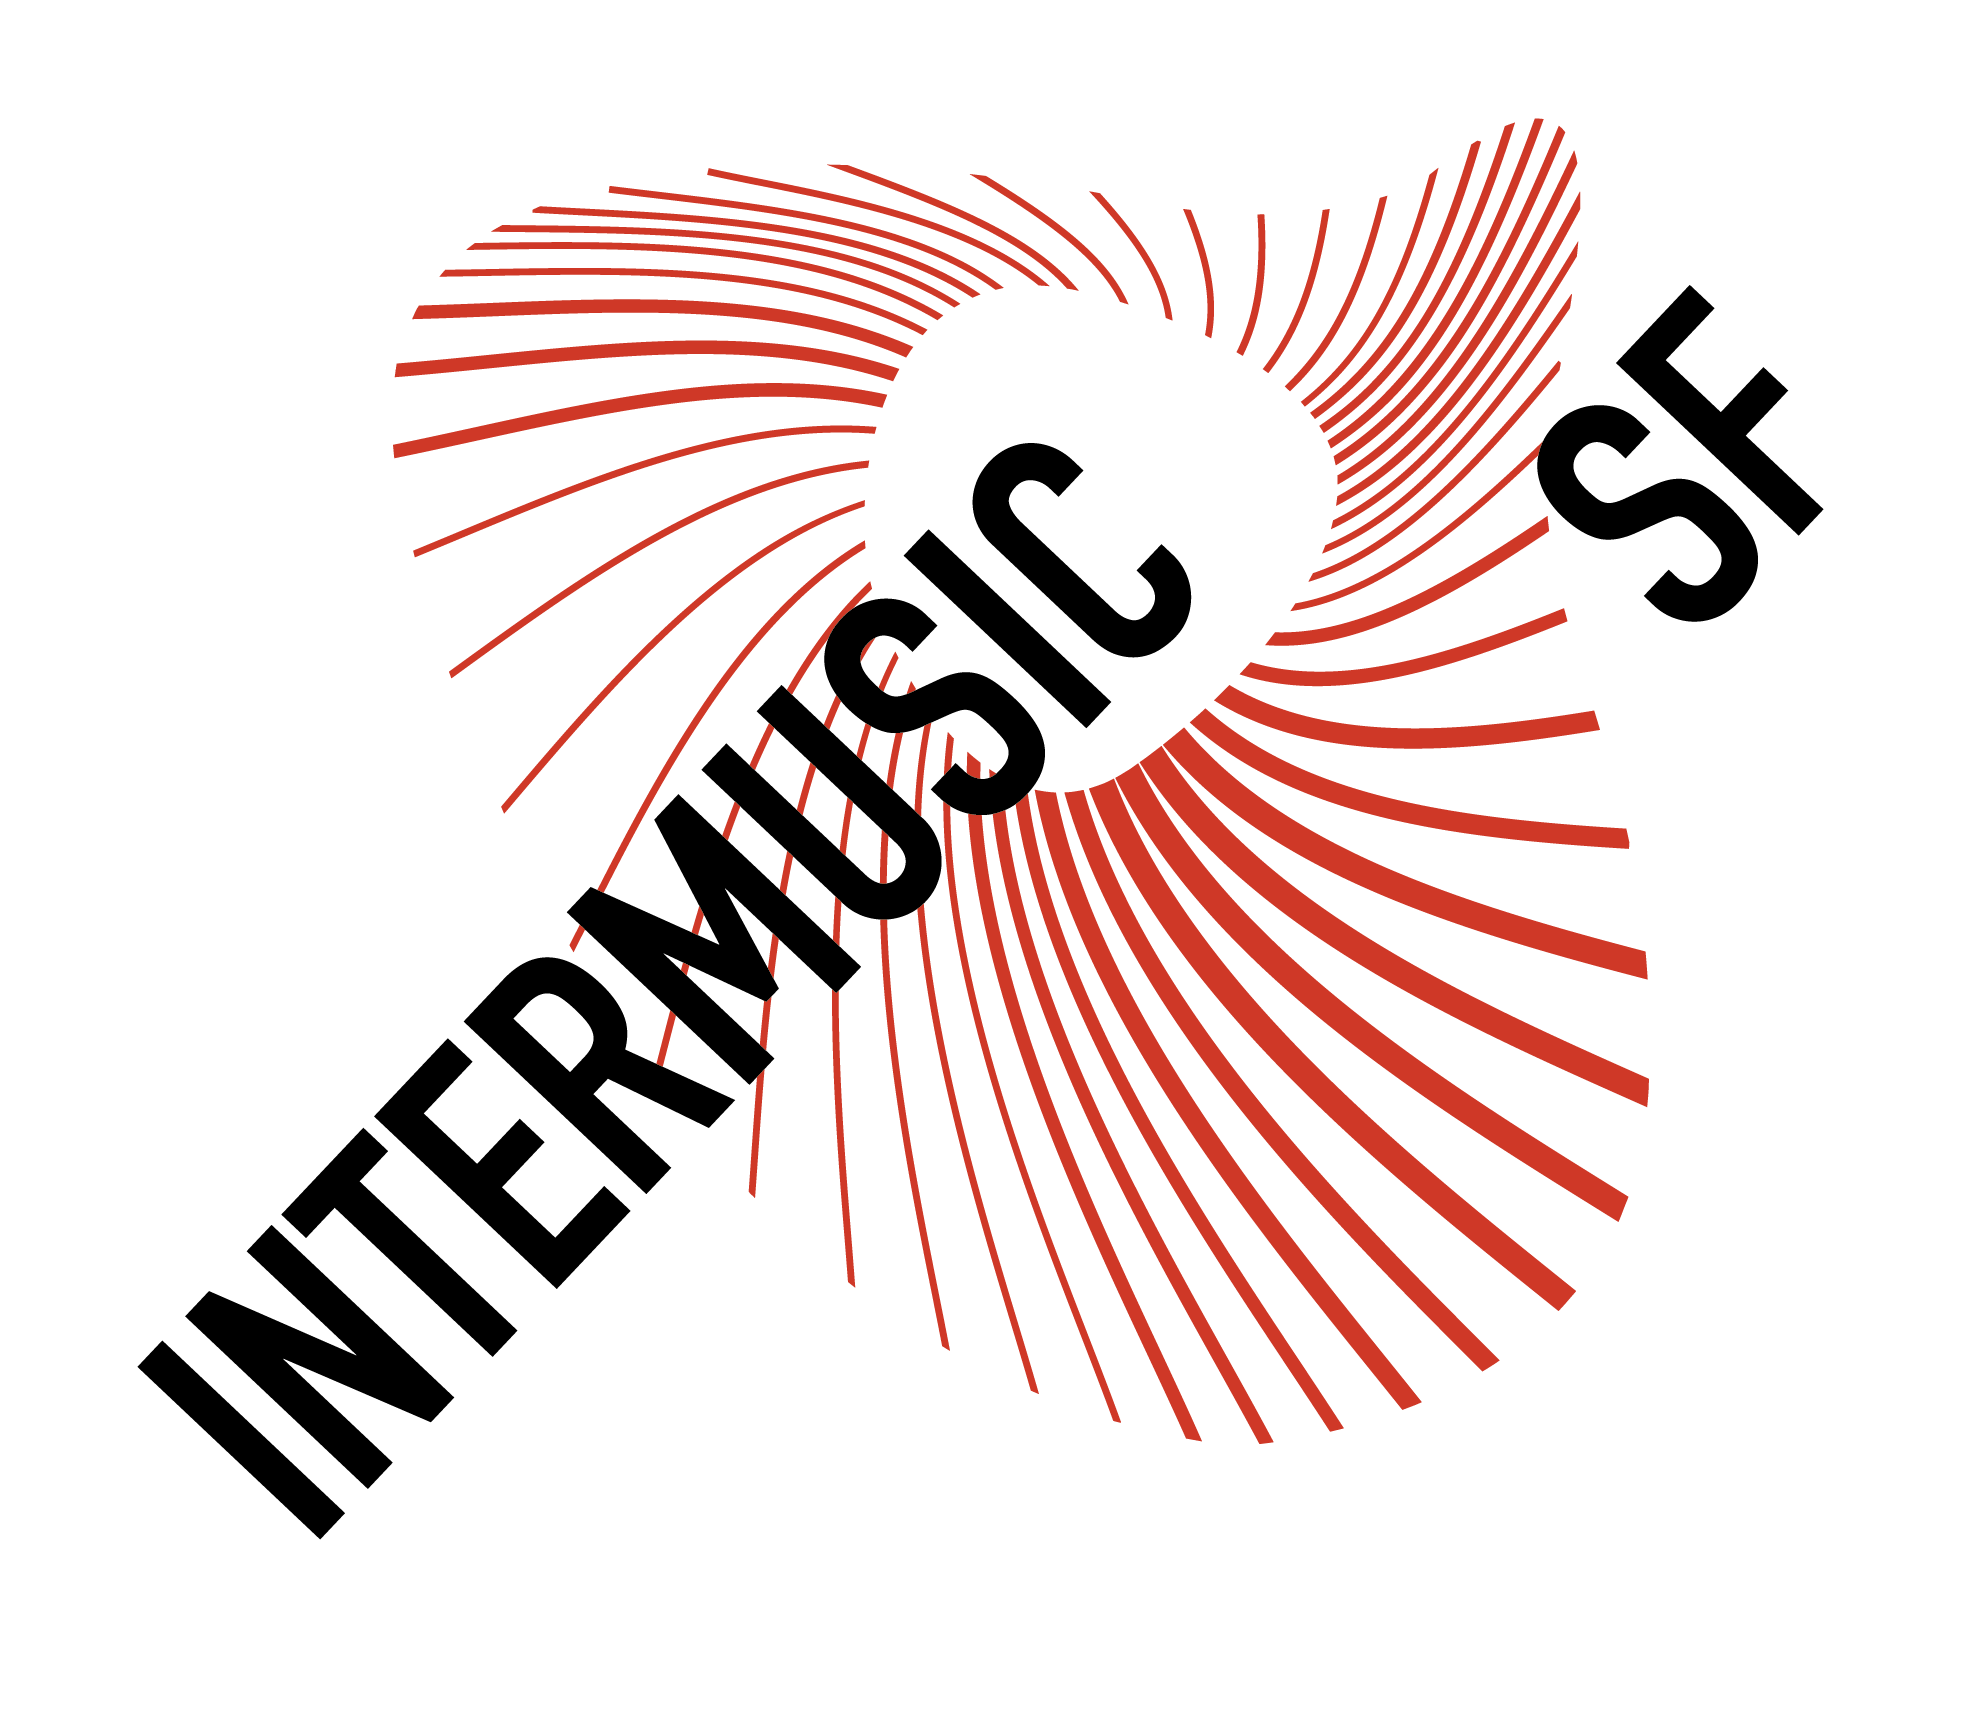 IntermusicSF